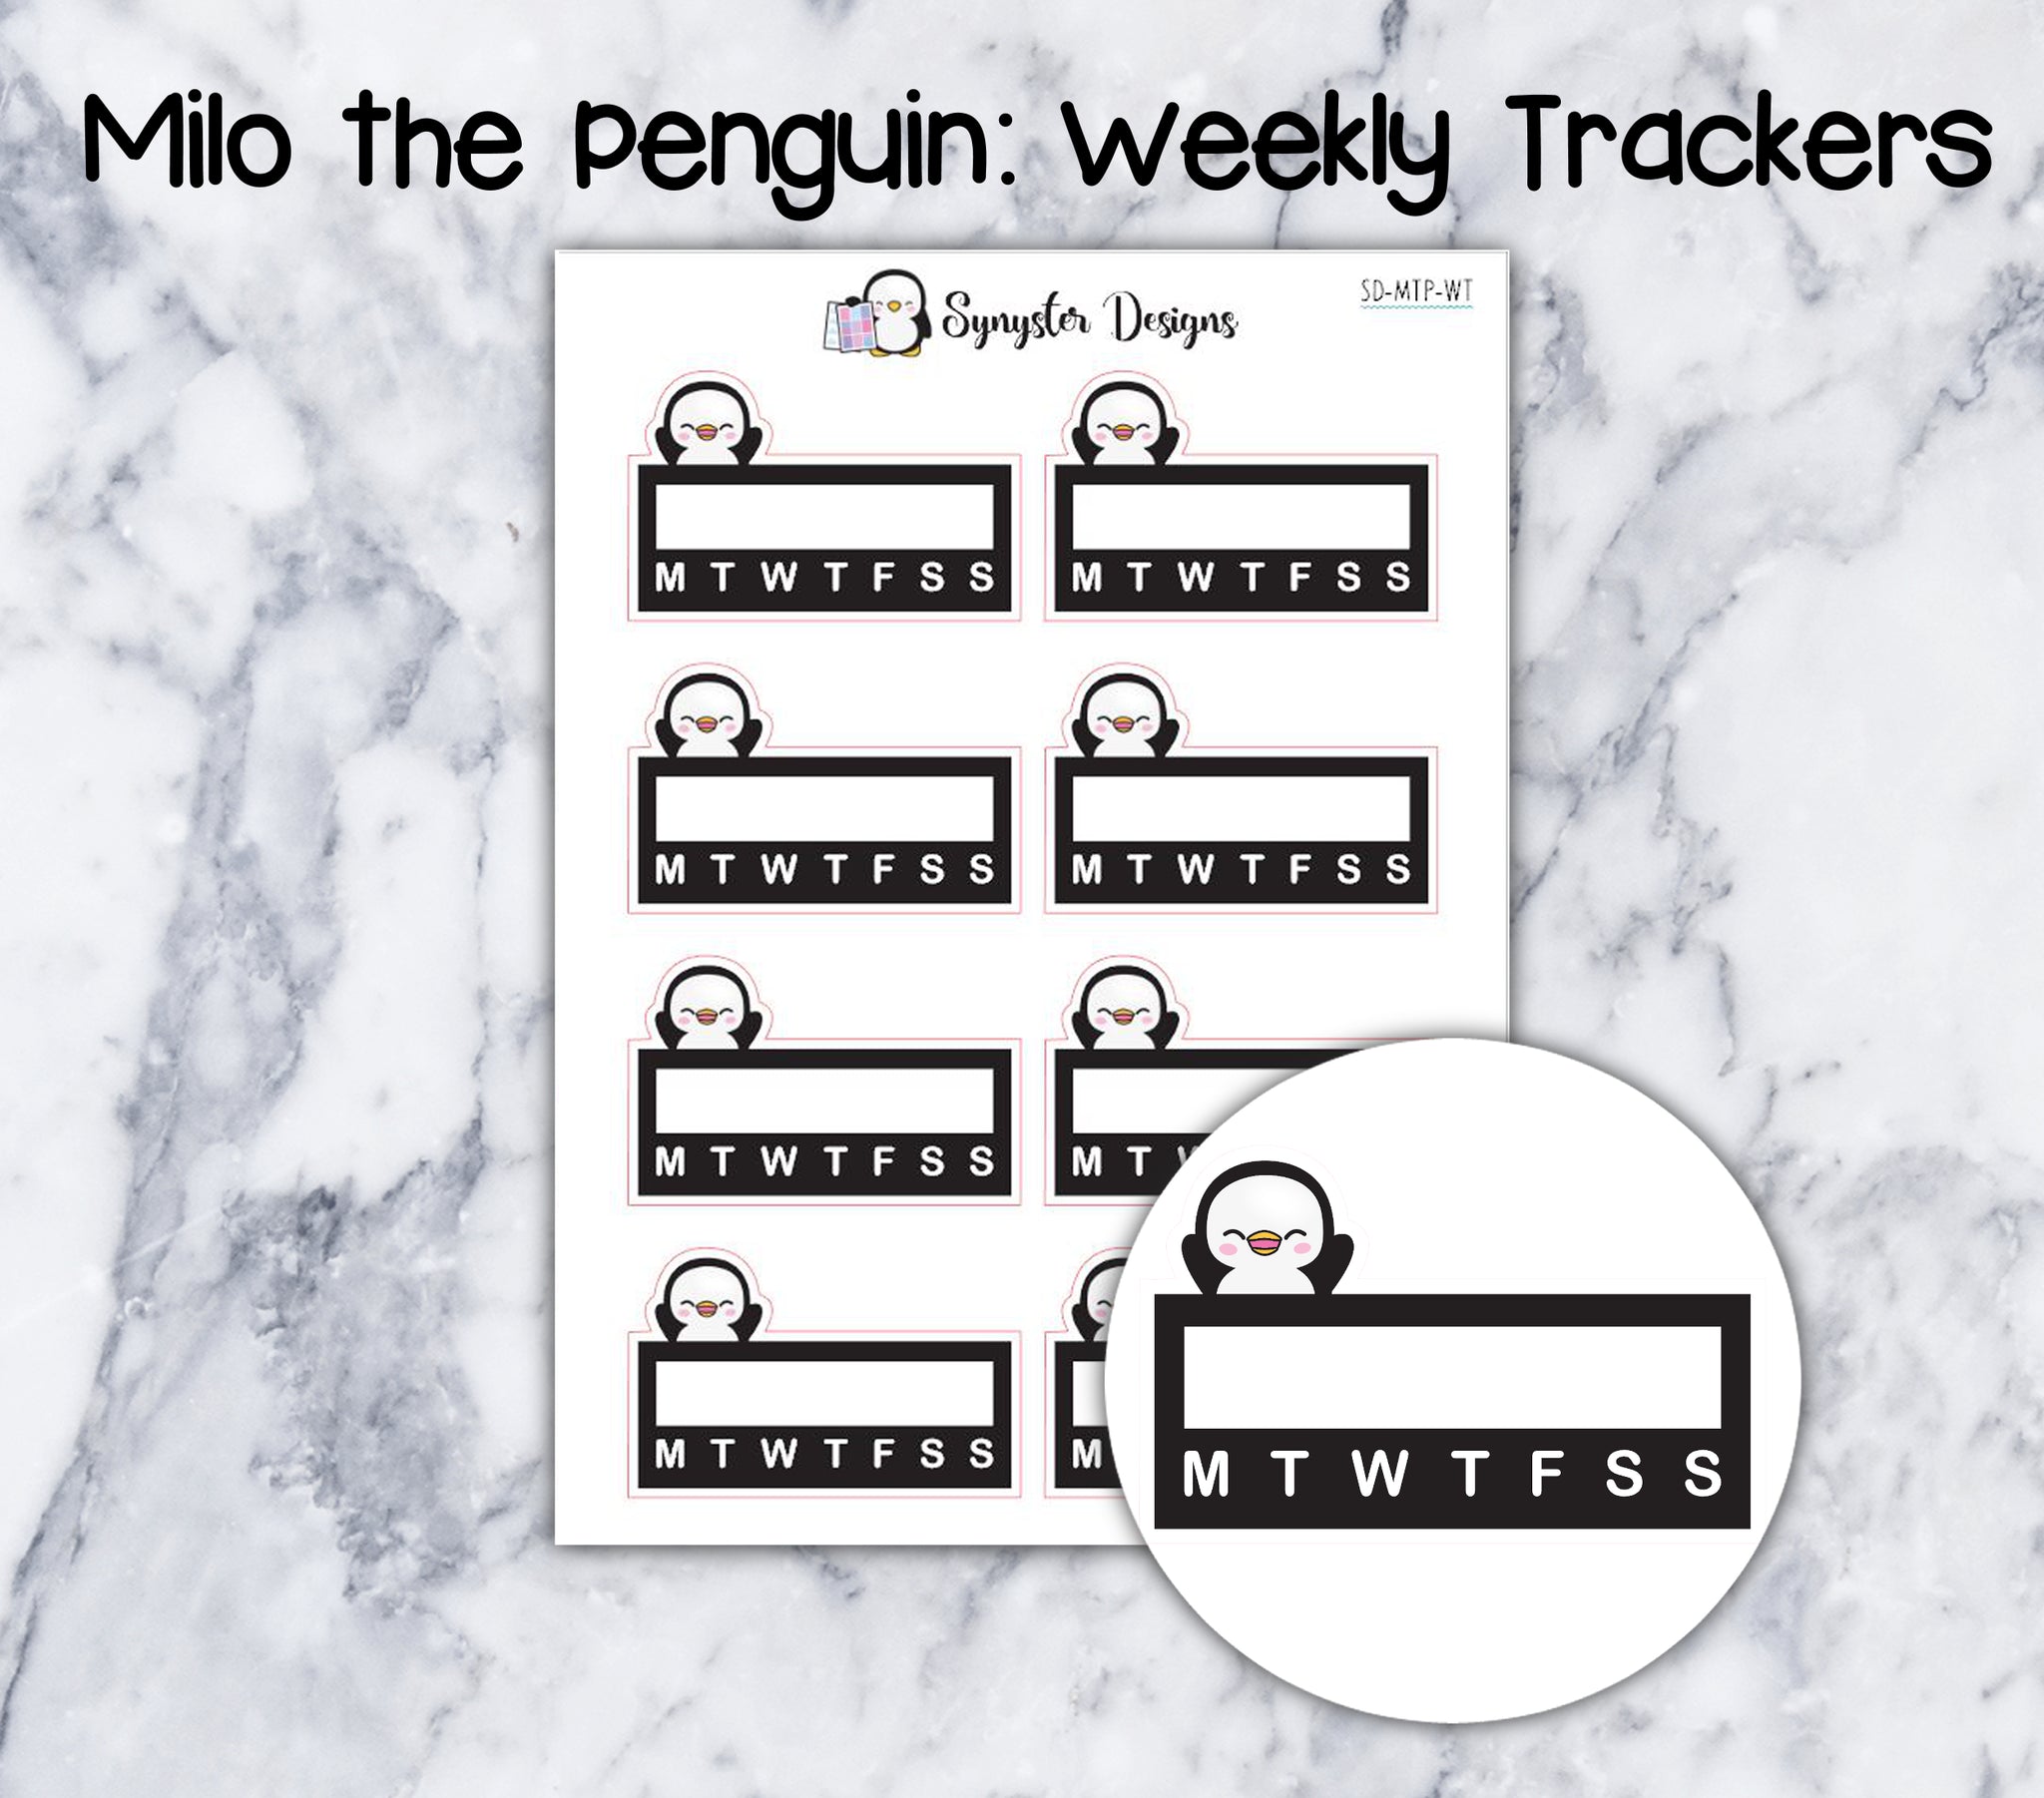 Trackers Milo the Penguin